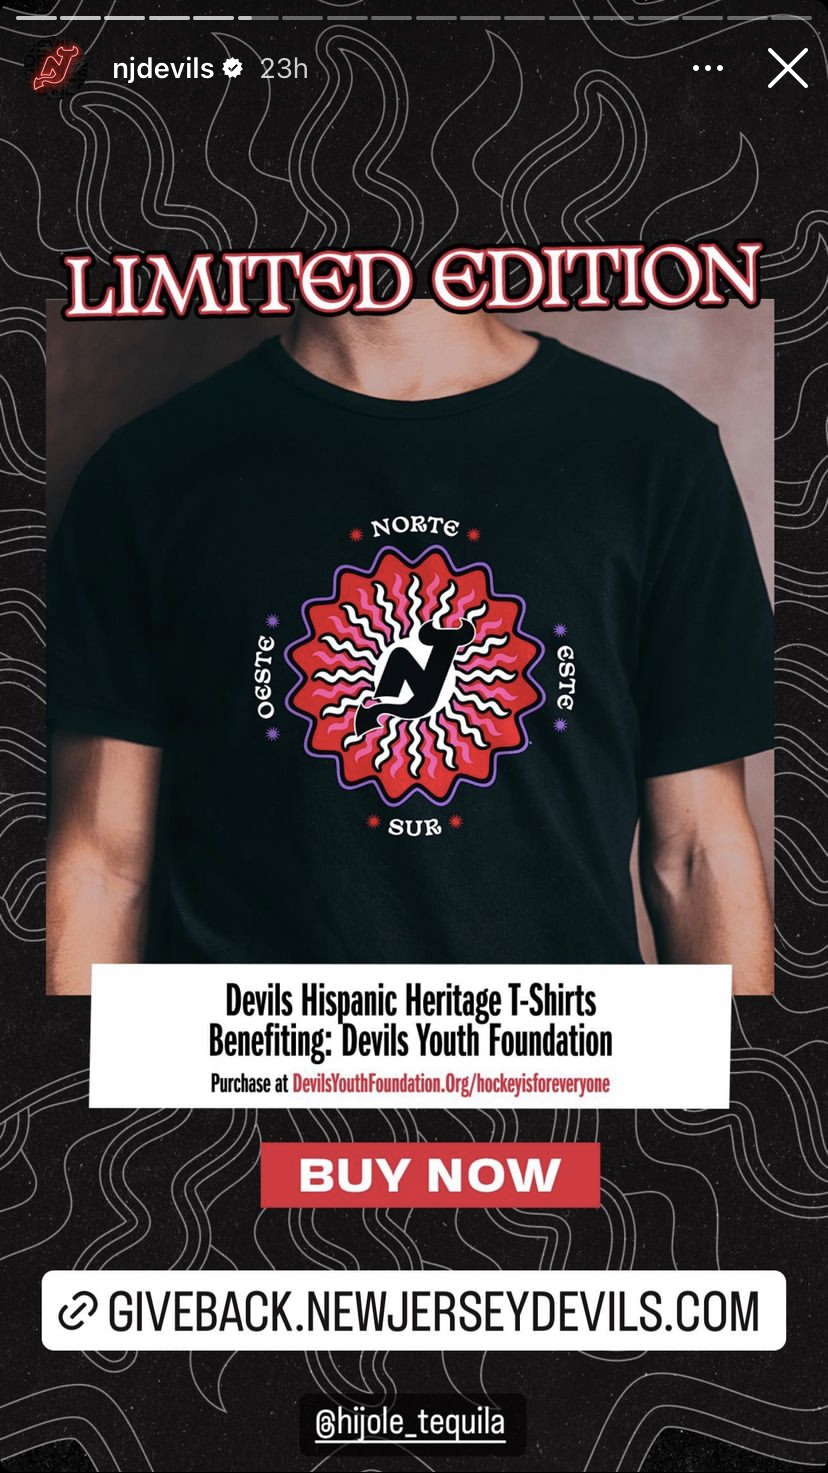 NHL on X: These @NYRangers jerseys for Hispanic Heritage Night 😍 The  shield was designed by New York-based Ecuadorian artist Mar Figueroa, who  incorporated elements related to Hispanic culture.  #NHLHispanicAndLATAMHeritage #HockeyIsForEveryo